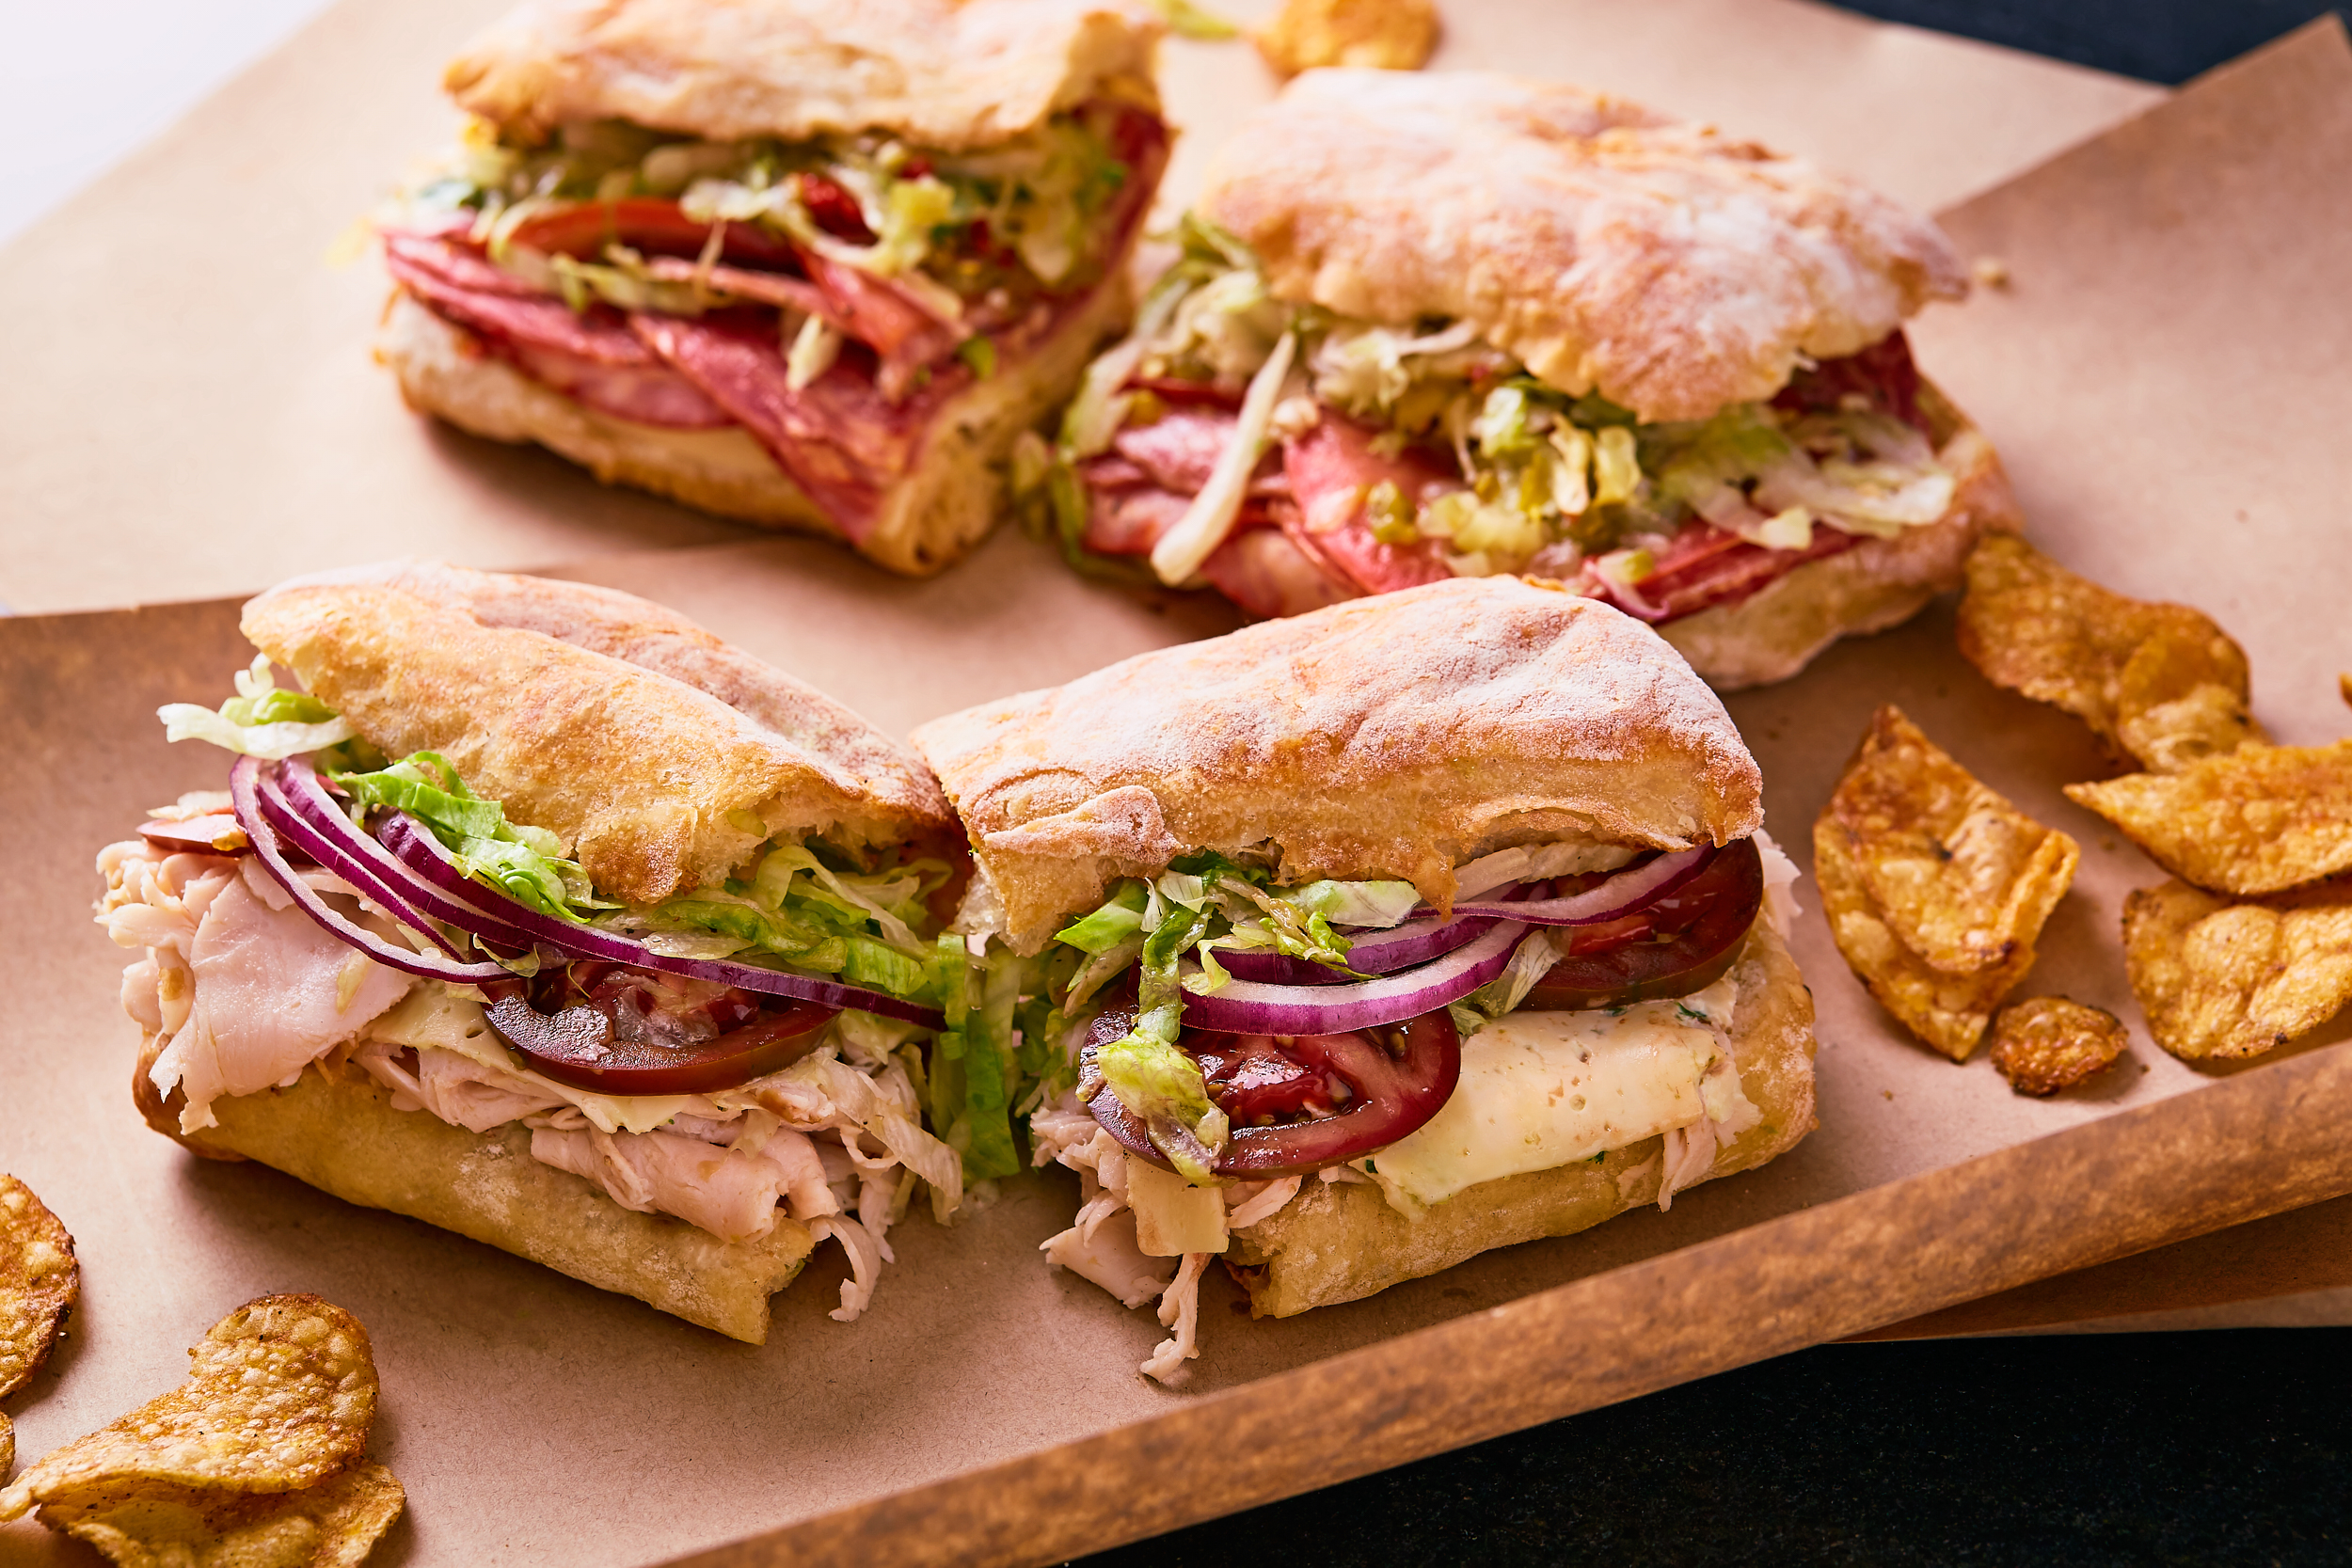 Turkey sandwich, classic Italian sub and barbecue chips.